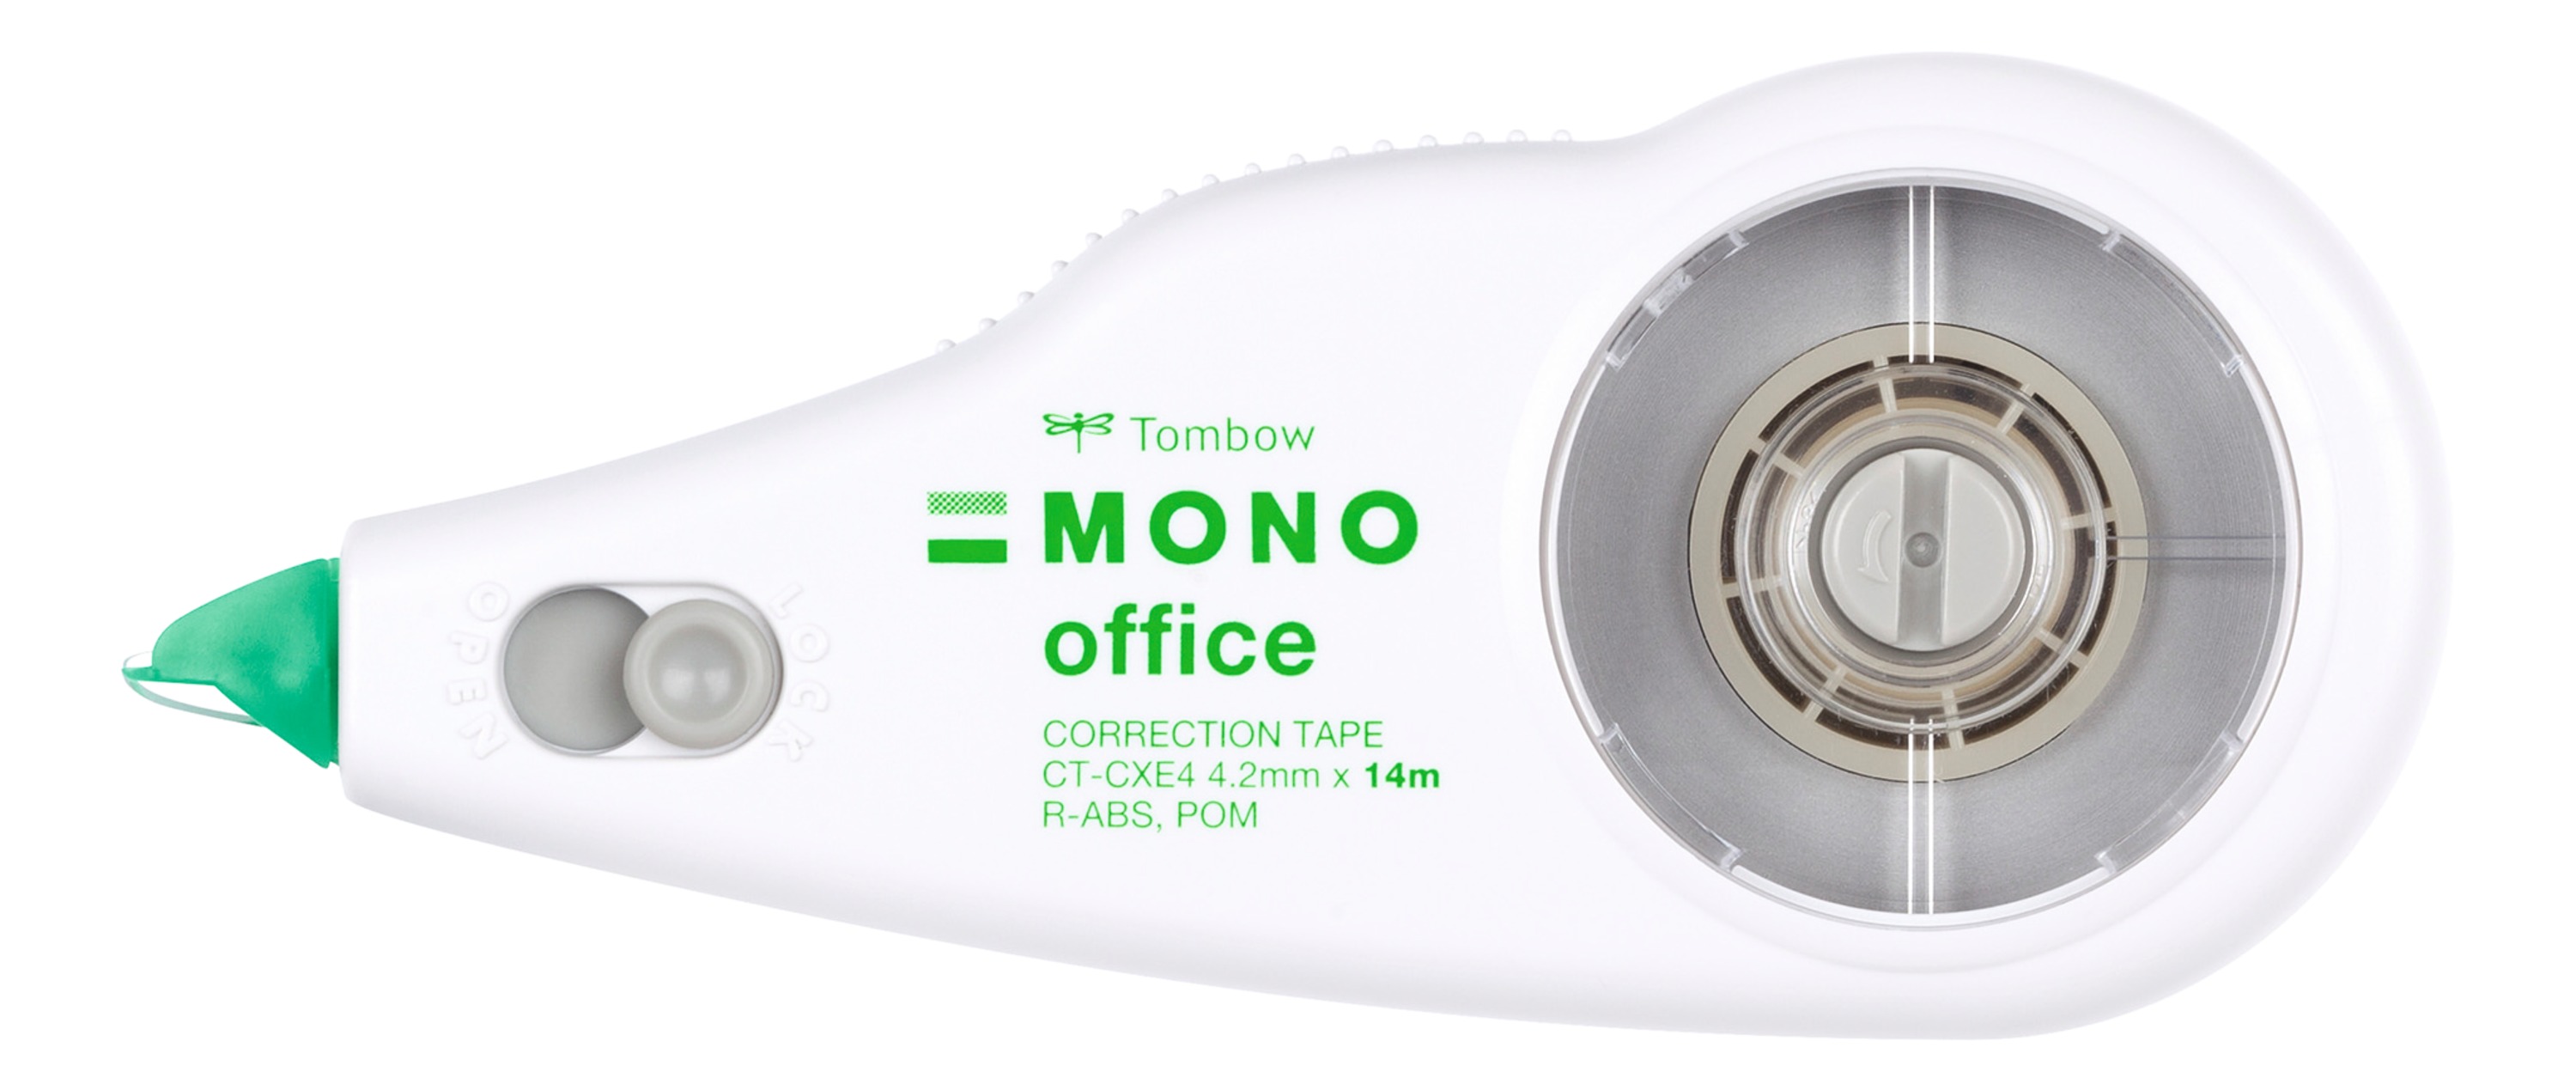 Tombow Mono Office 4.2mmx14m CT-CXE4